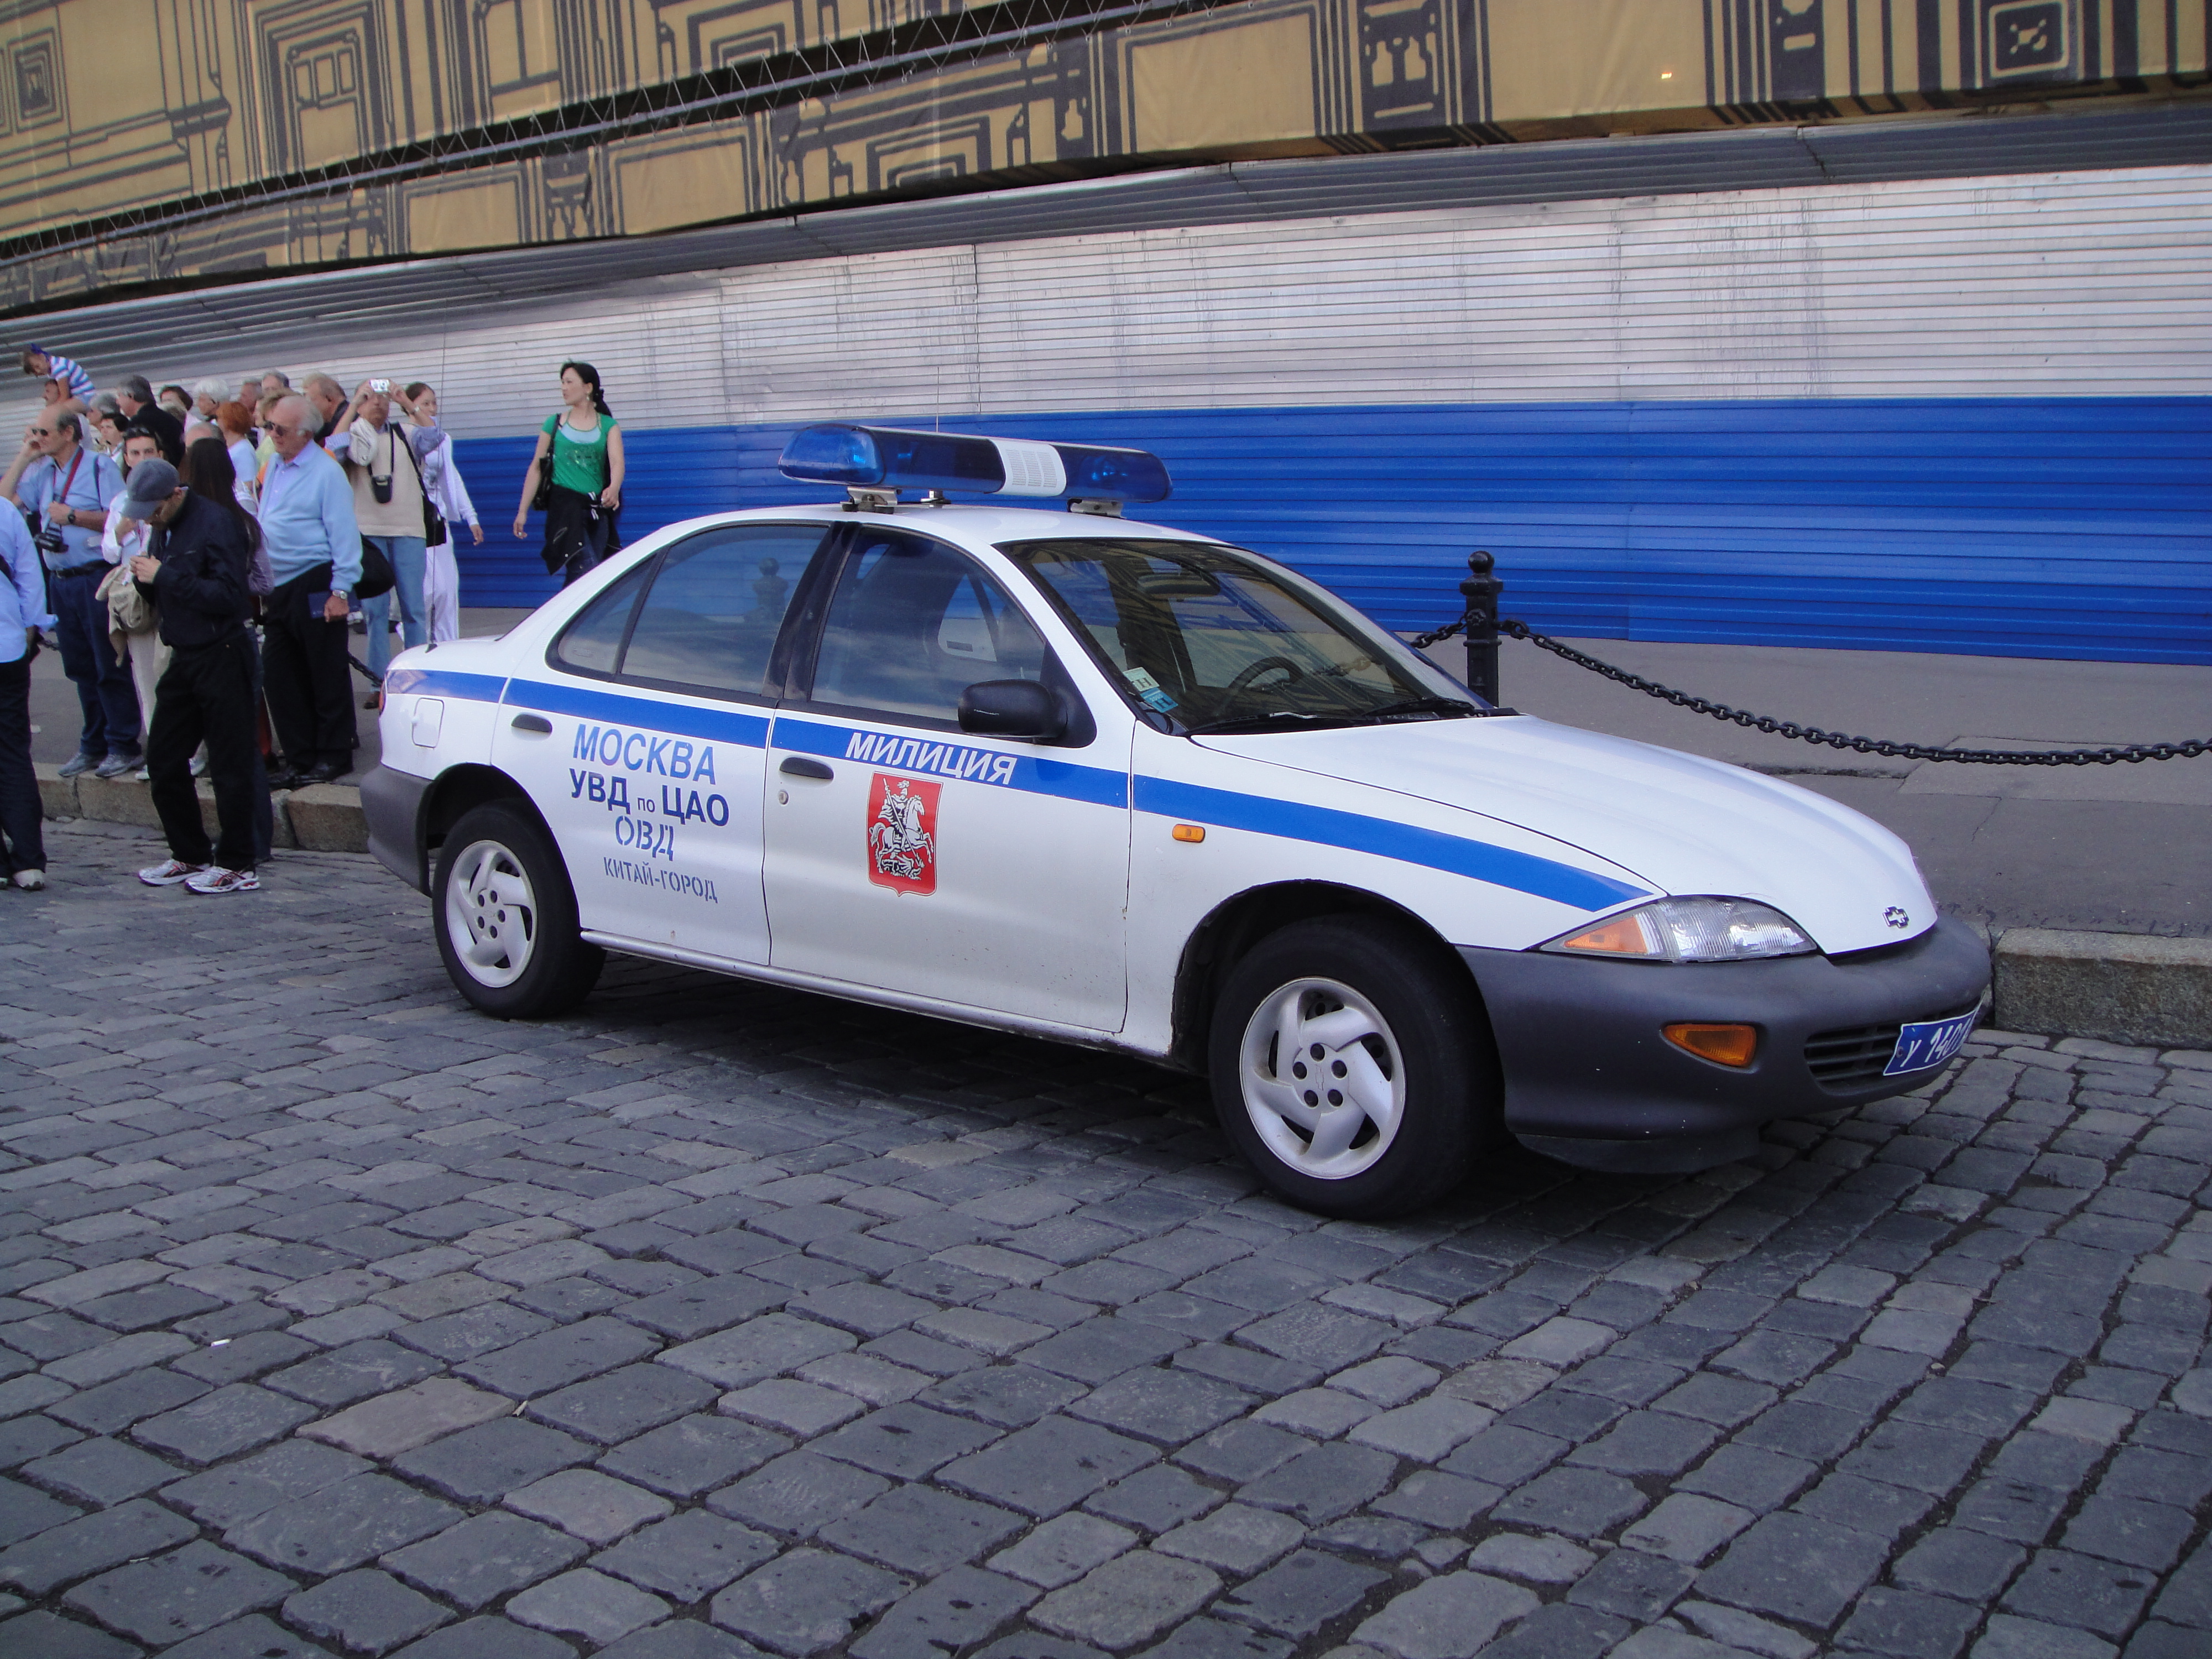 Усб дпс. Chevrolet Cavalier полиция. Chevrolet Cavalier 1997 милиция. Chevrolet Cavalier полиция Москвы. Шевроле Кавальер милиция.